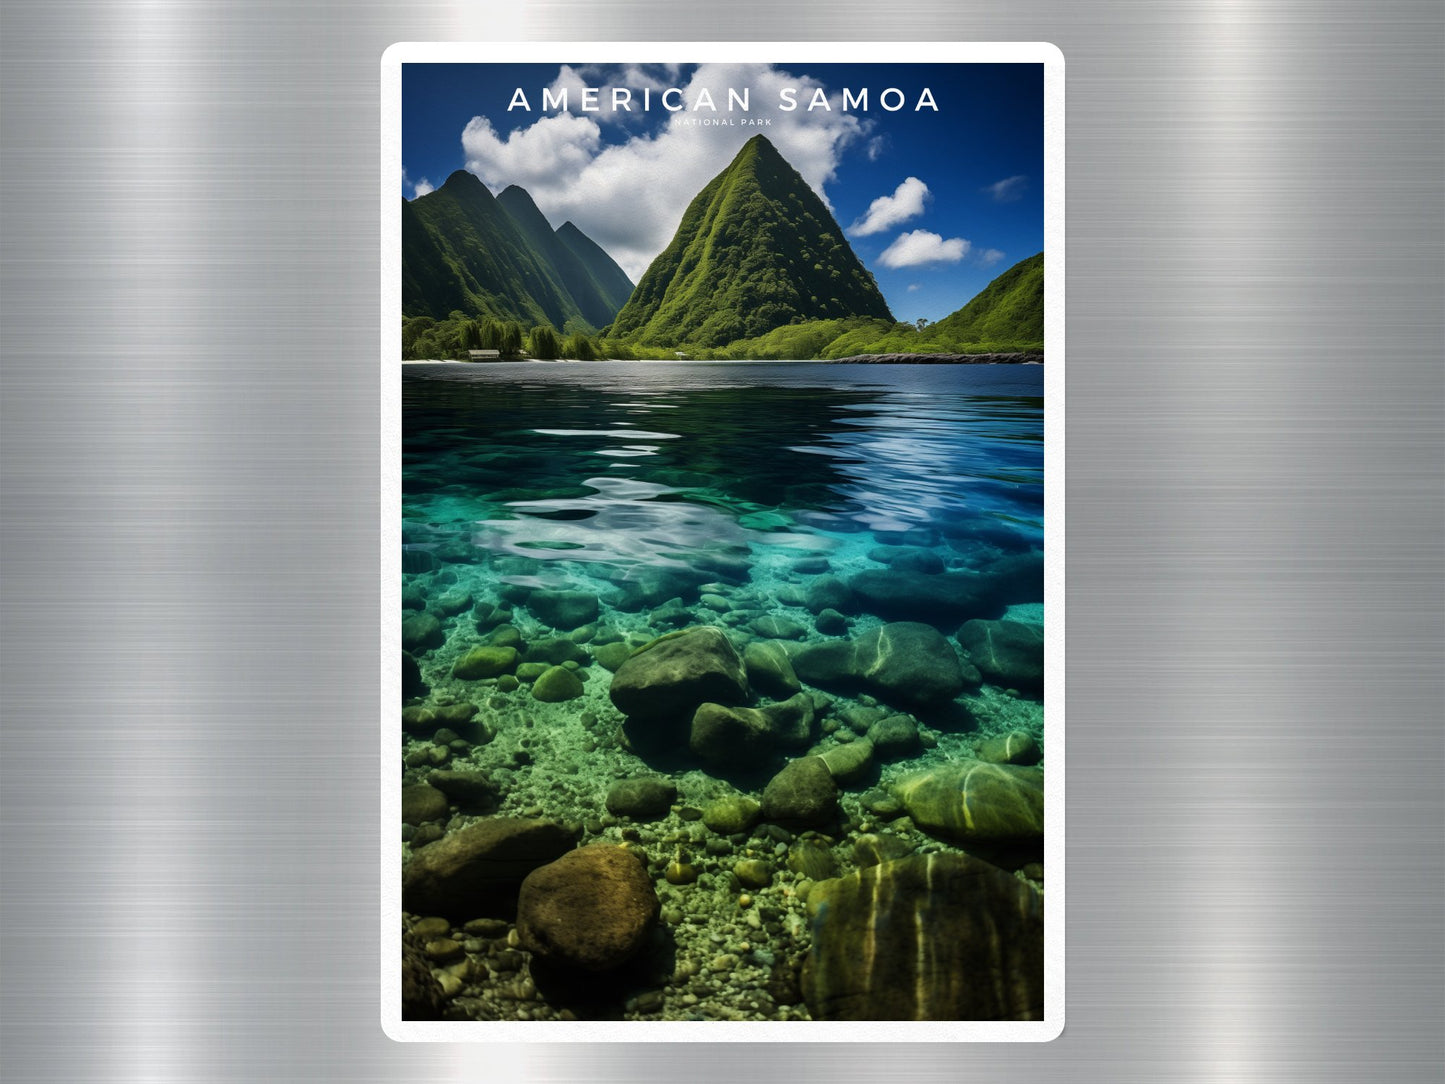 American Samoa National Park Sticker